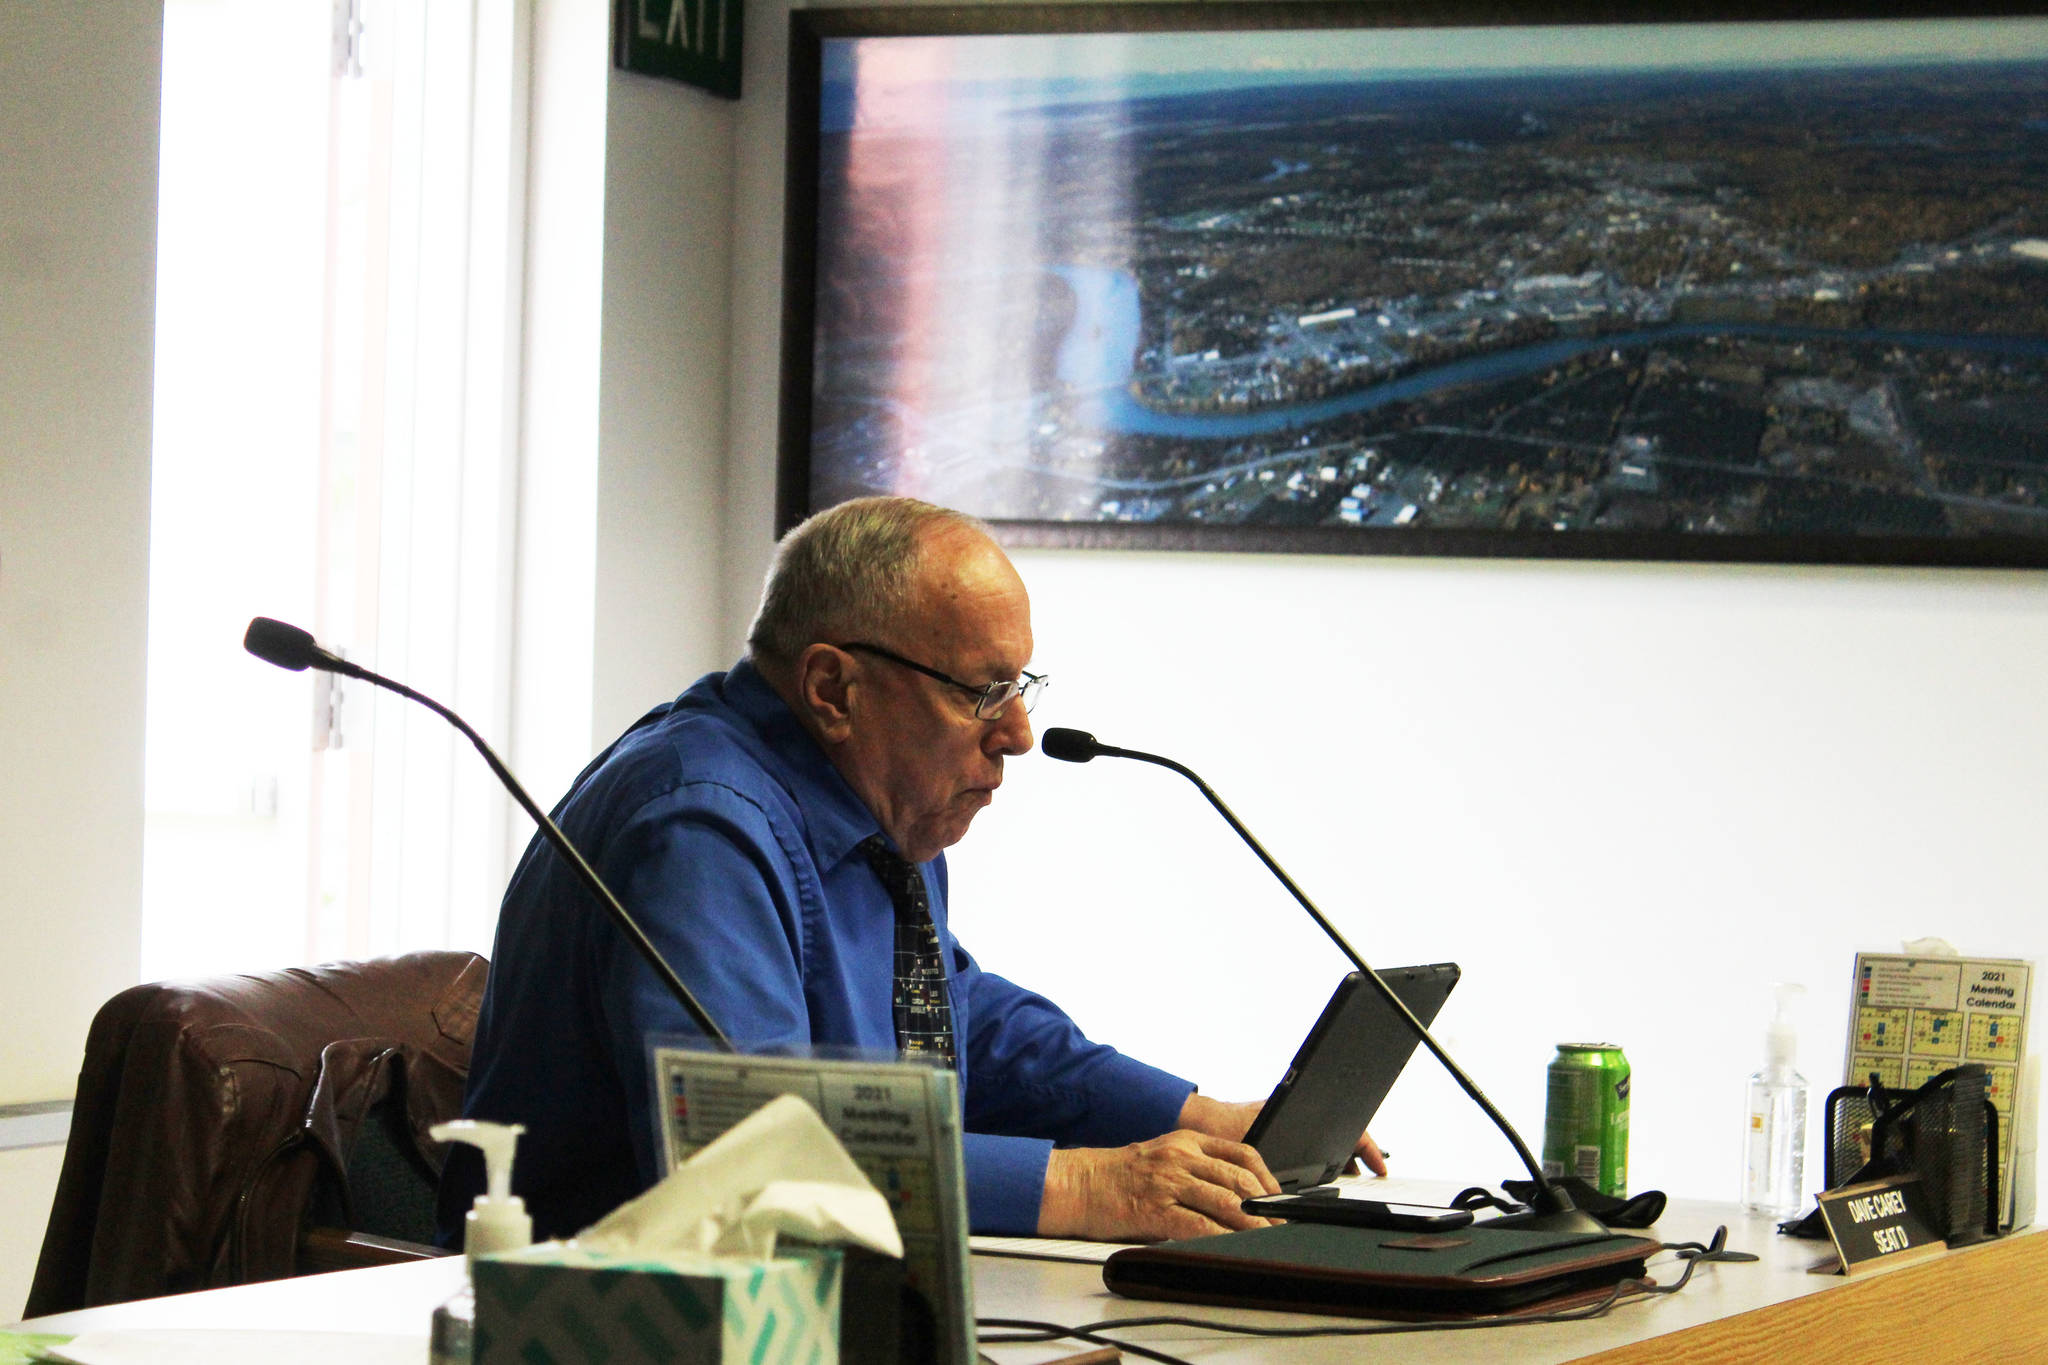 Council member Dave Carey attends a meeting of the Soldotna City Council on Wednesday, Aug. 11, 2021 in Soldotna, Alaska. (Ashlyn O’Hara/Peninsula Clarion)